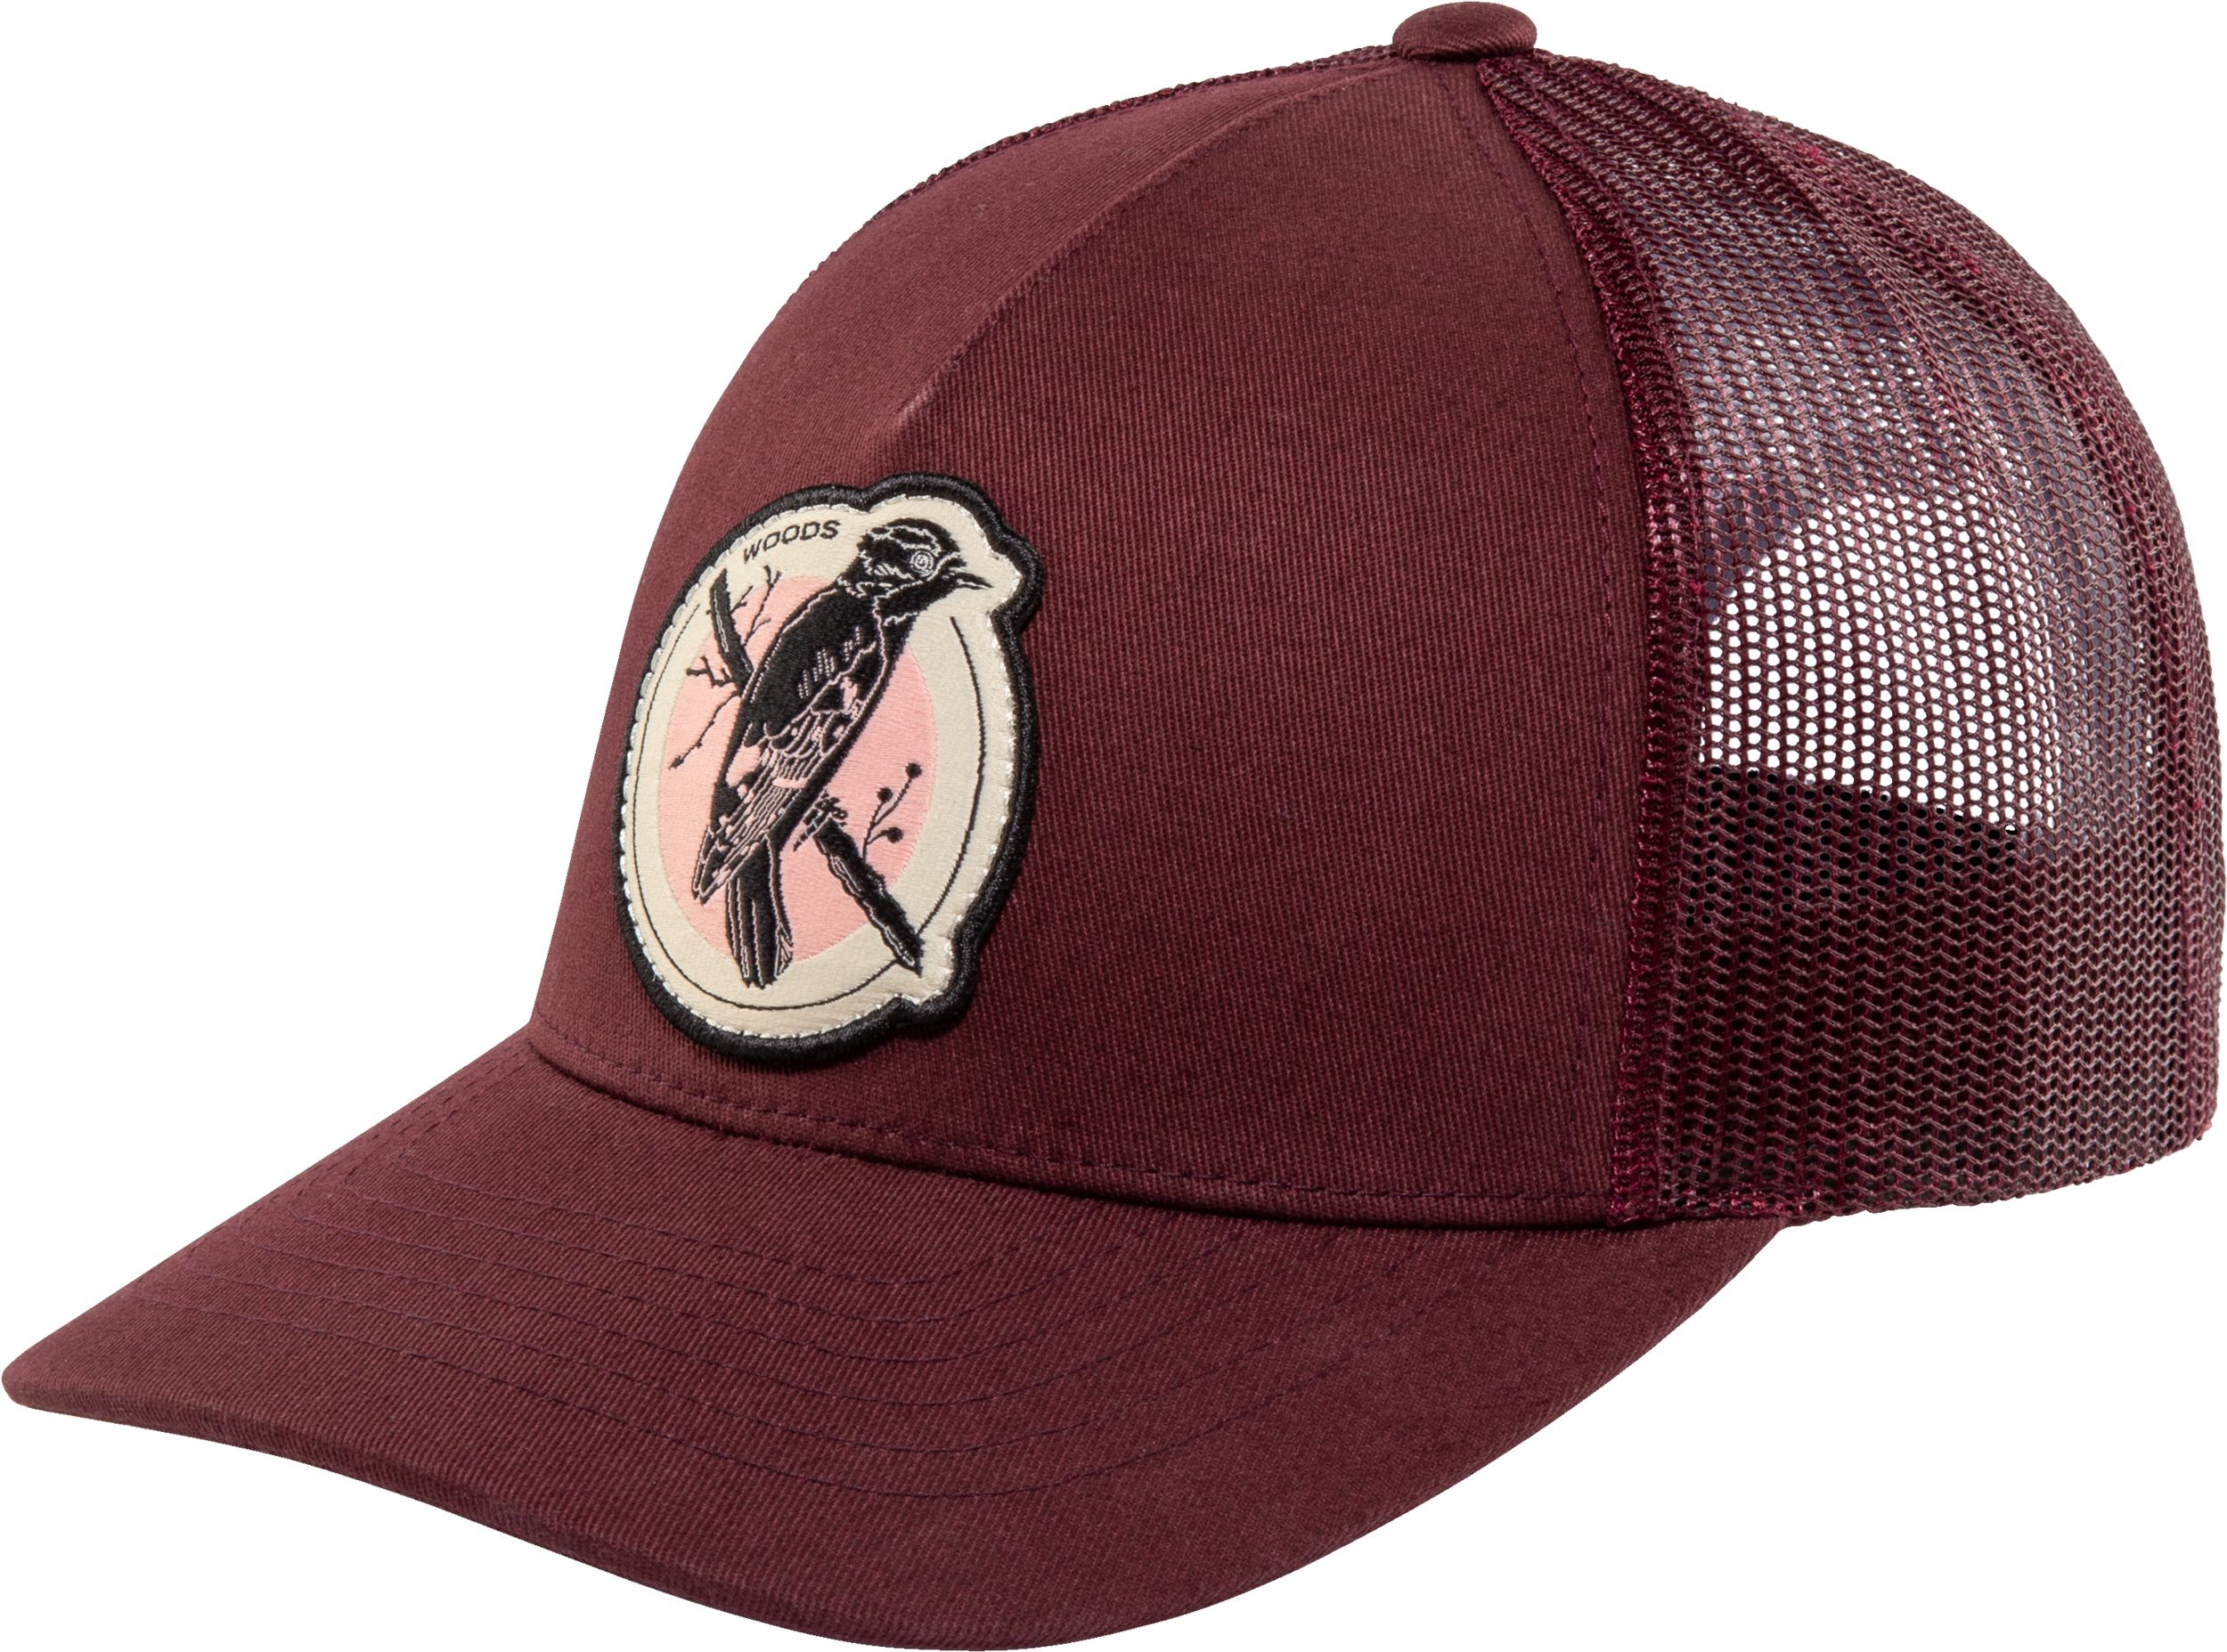 Image of Woods Women's Heritage Badge Snapback Hat